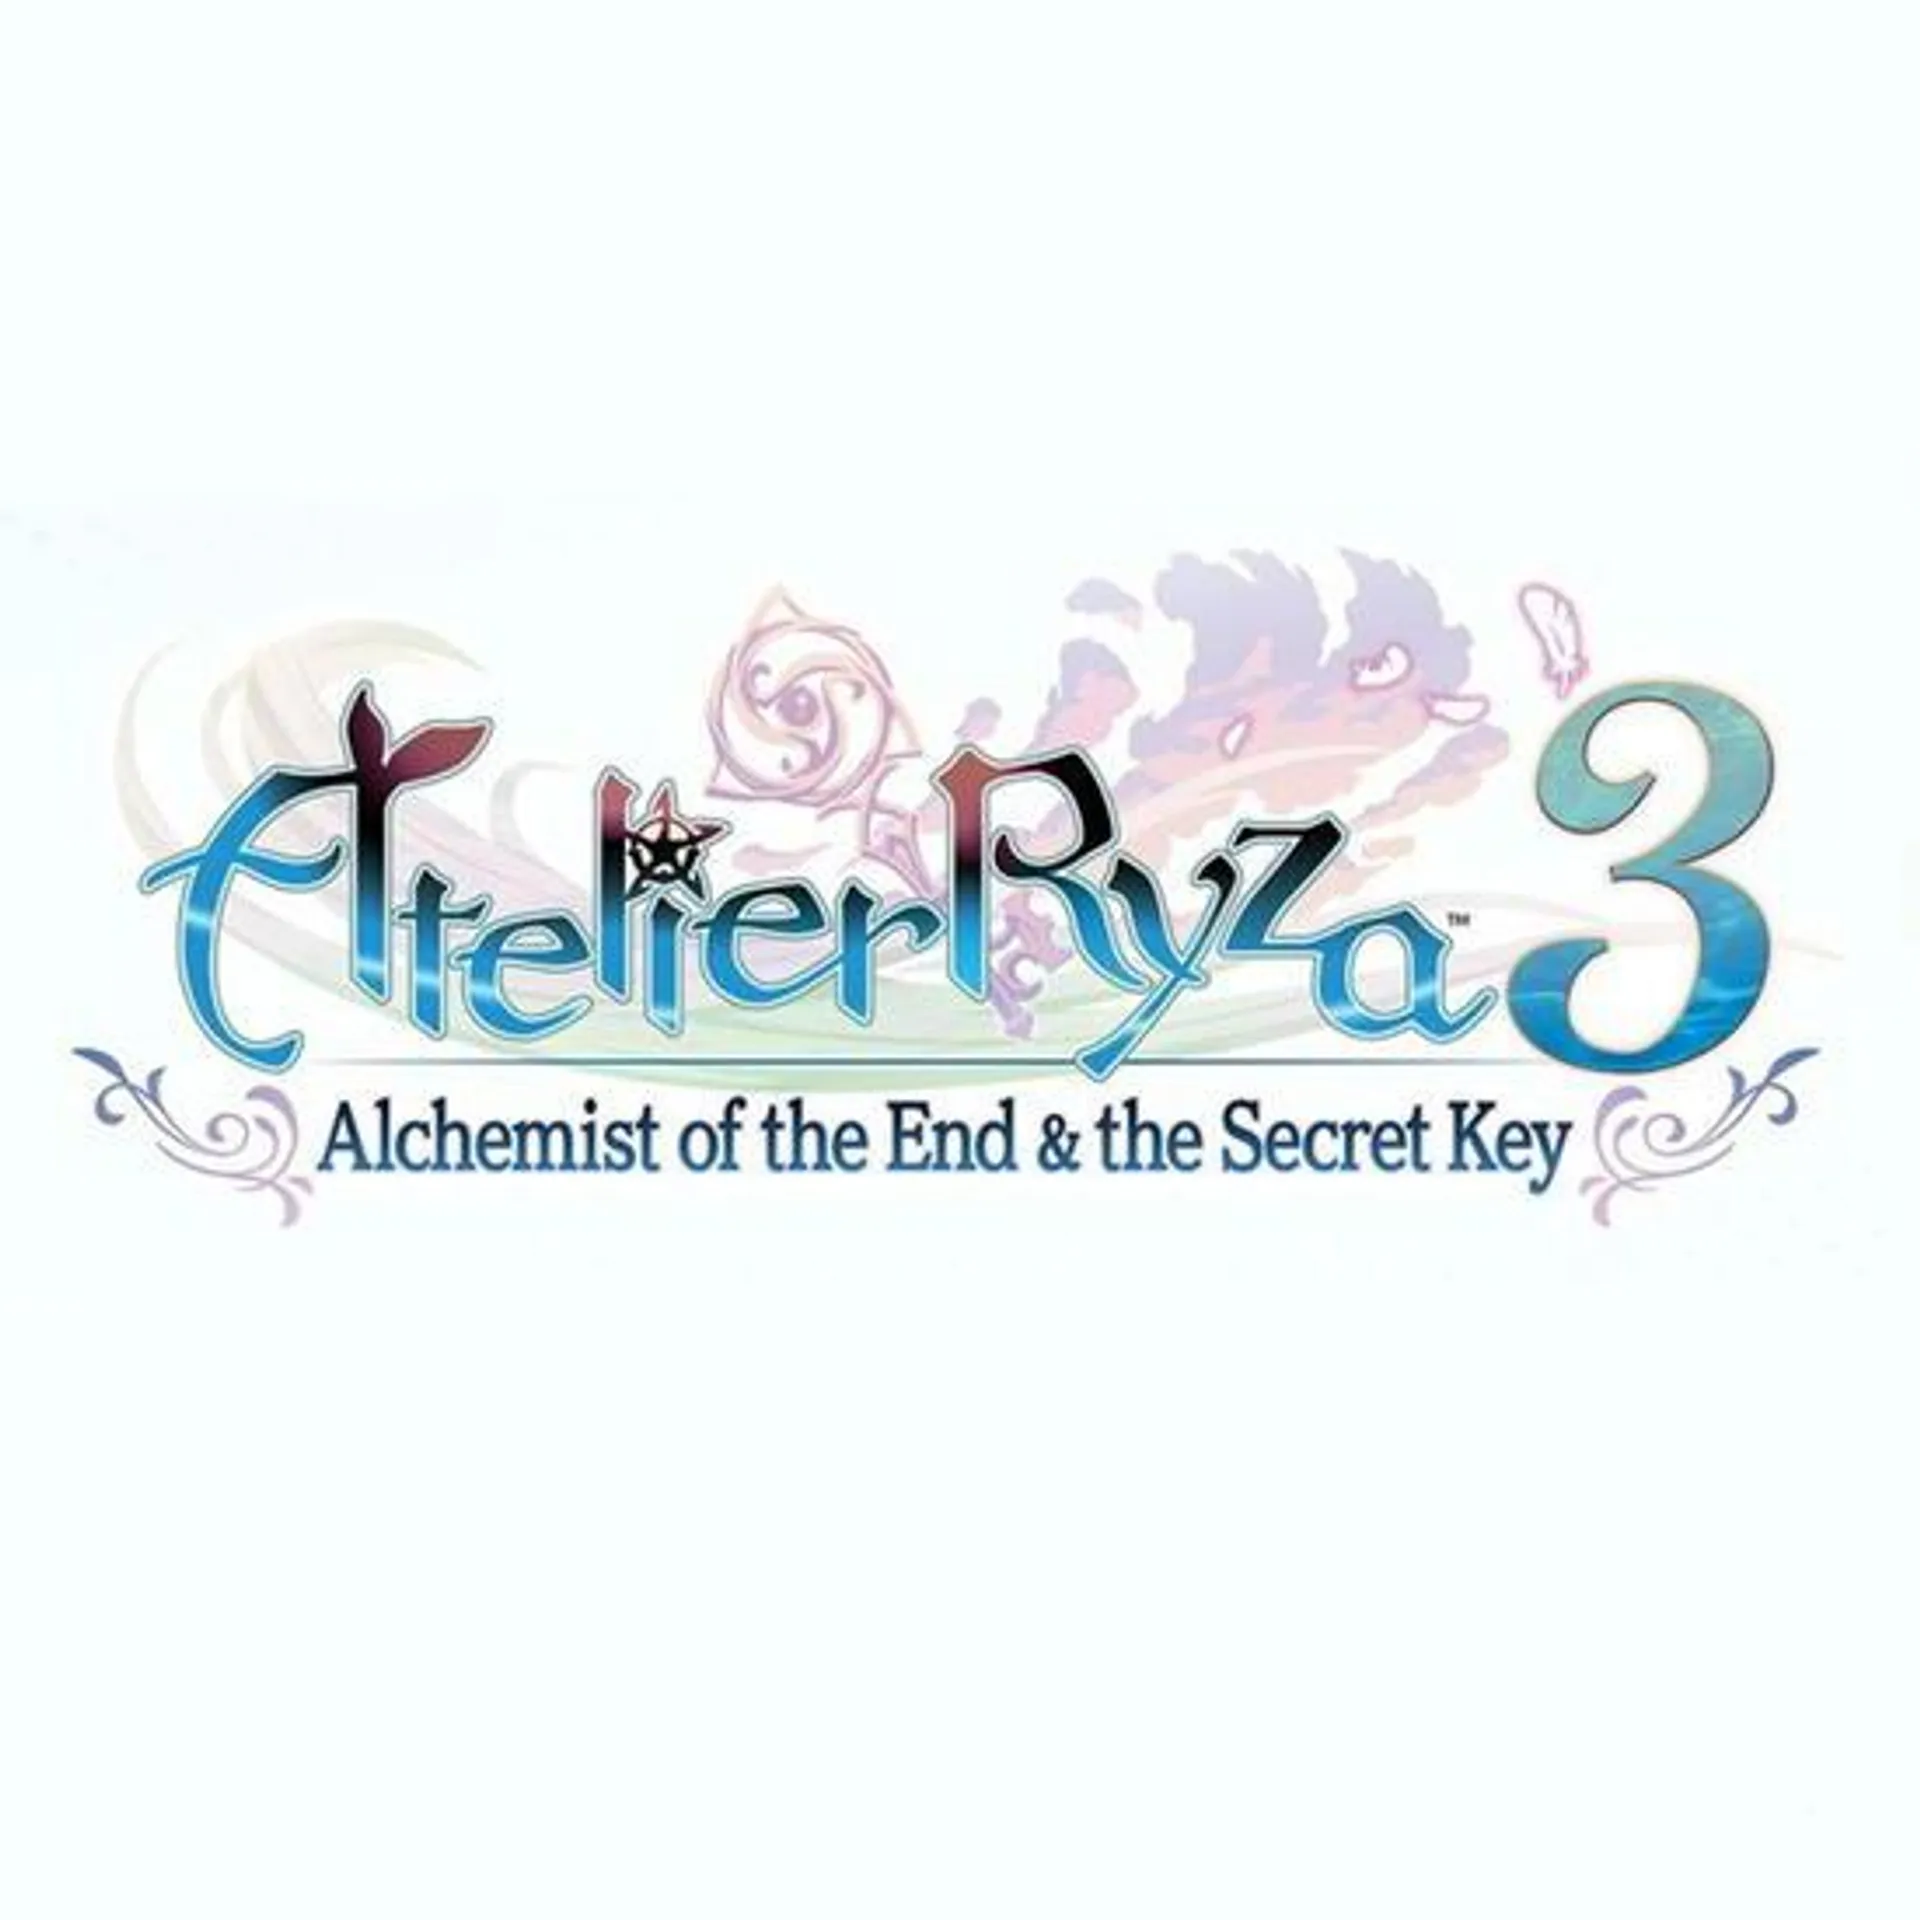 Atelier Ryza 3 Alchemist of the End & Secret Key